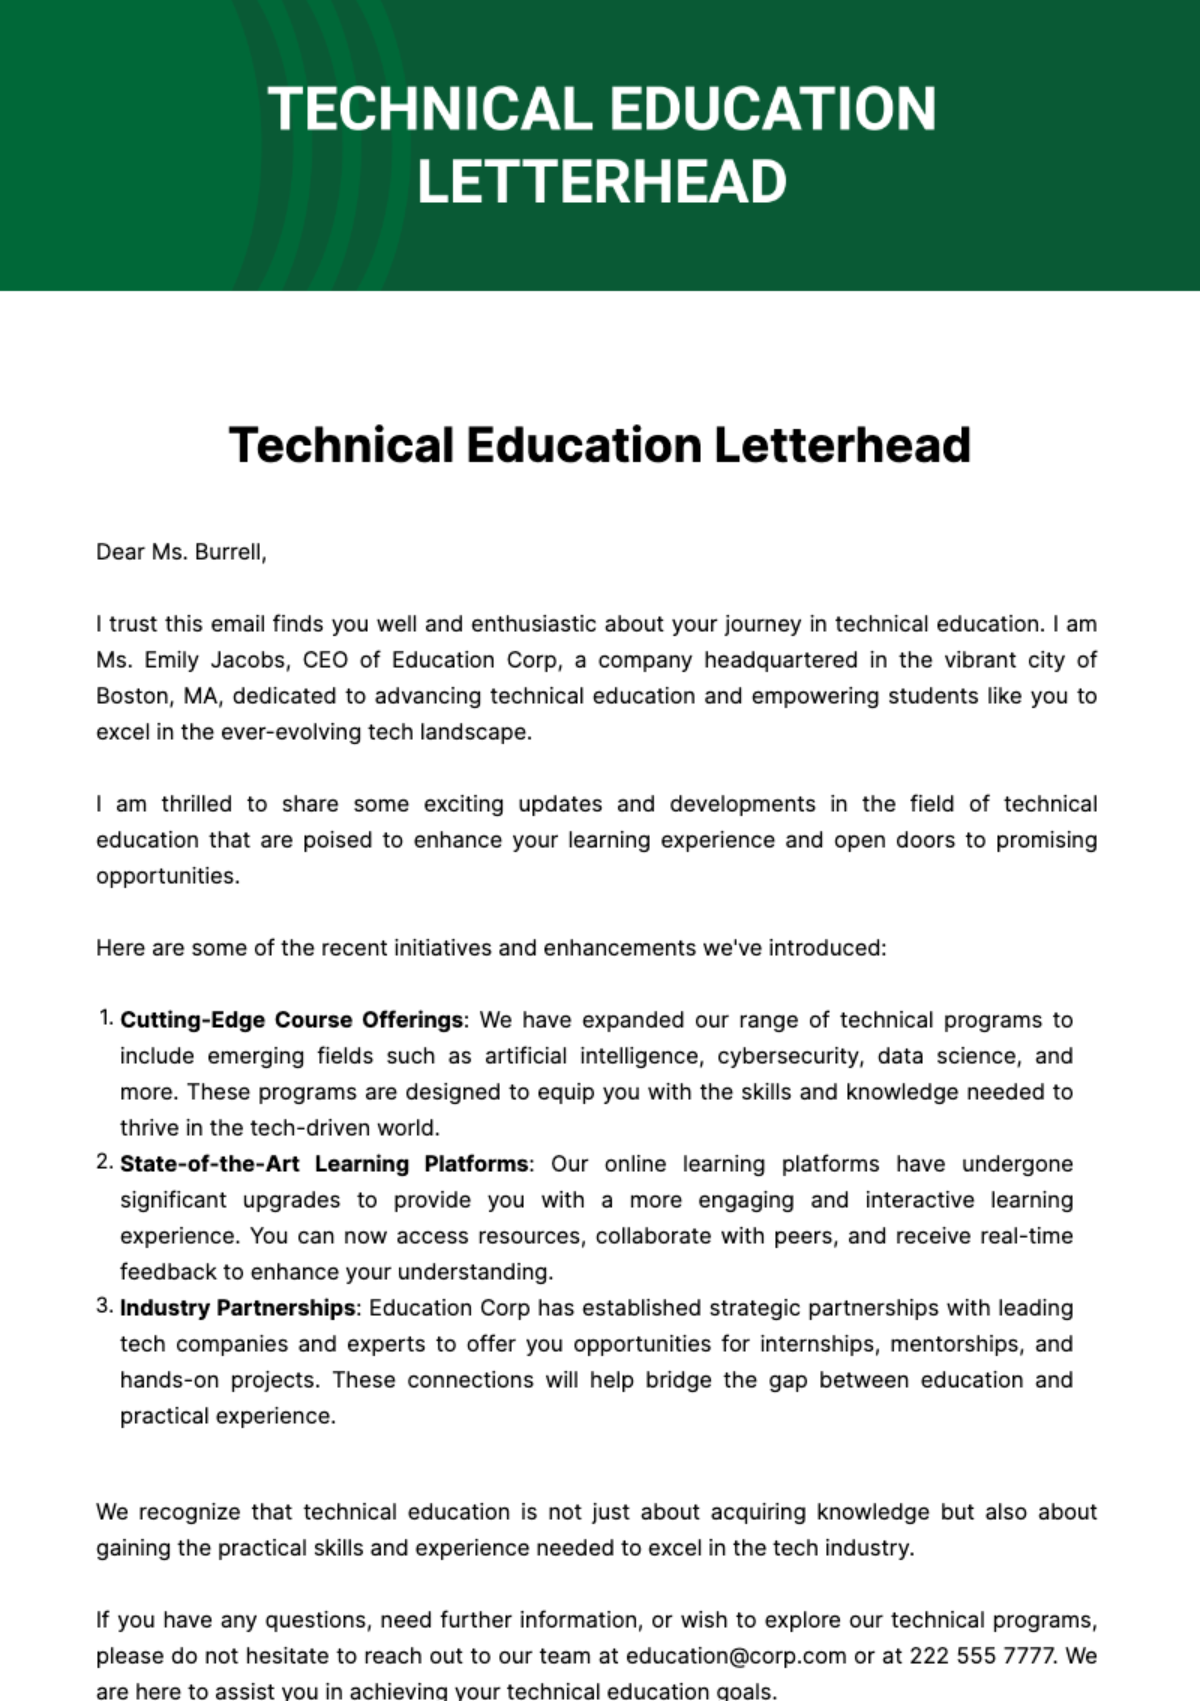 Free Technical Education Letterhead Template